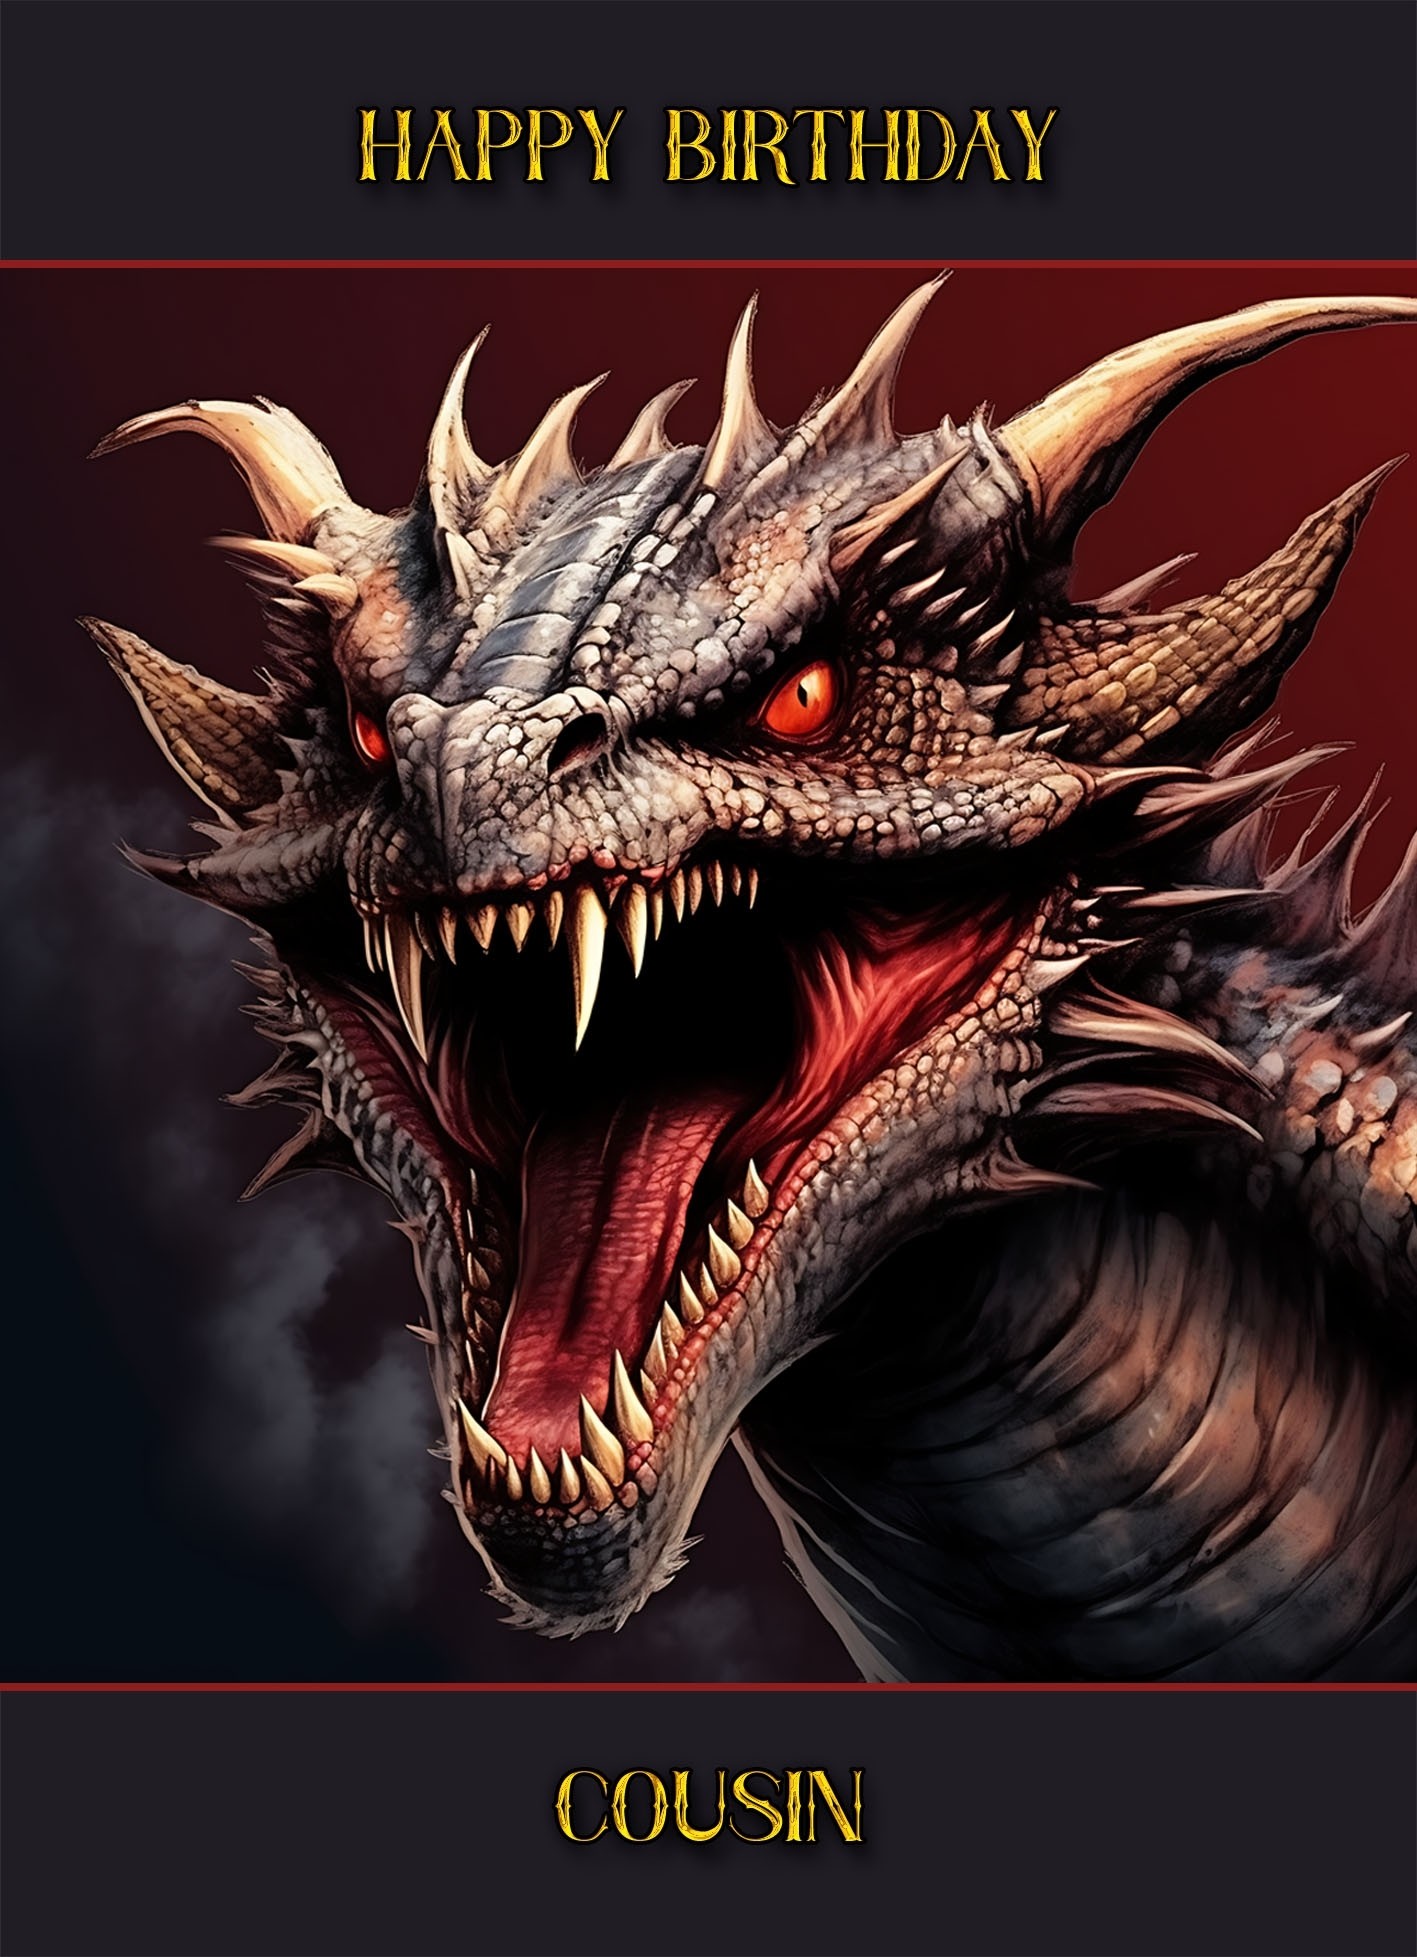 Gothic Fantasy Dragon Birthday Card For Cousin (Design 2)